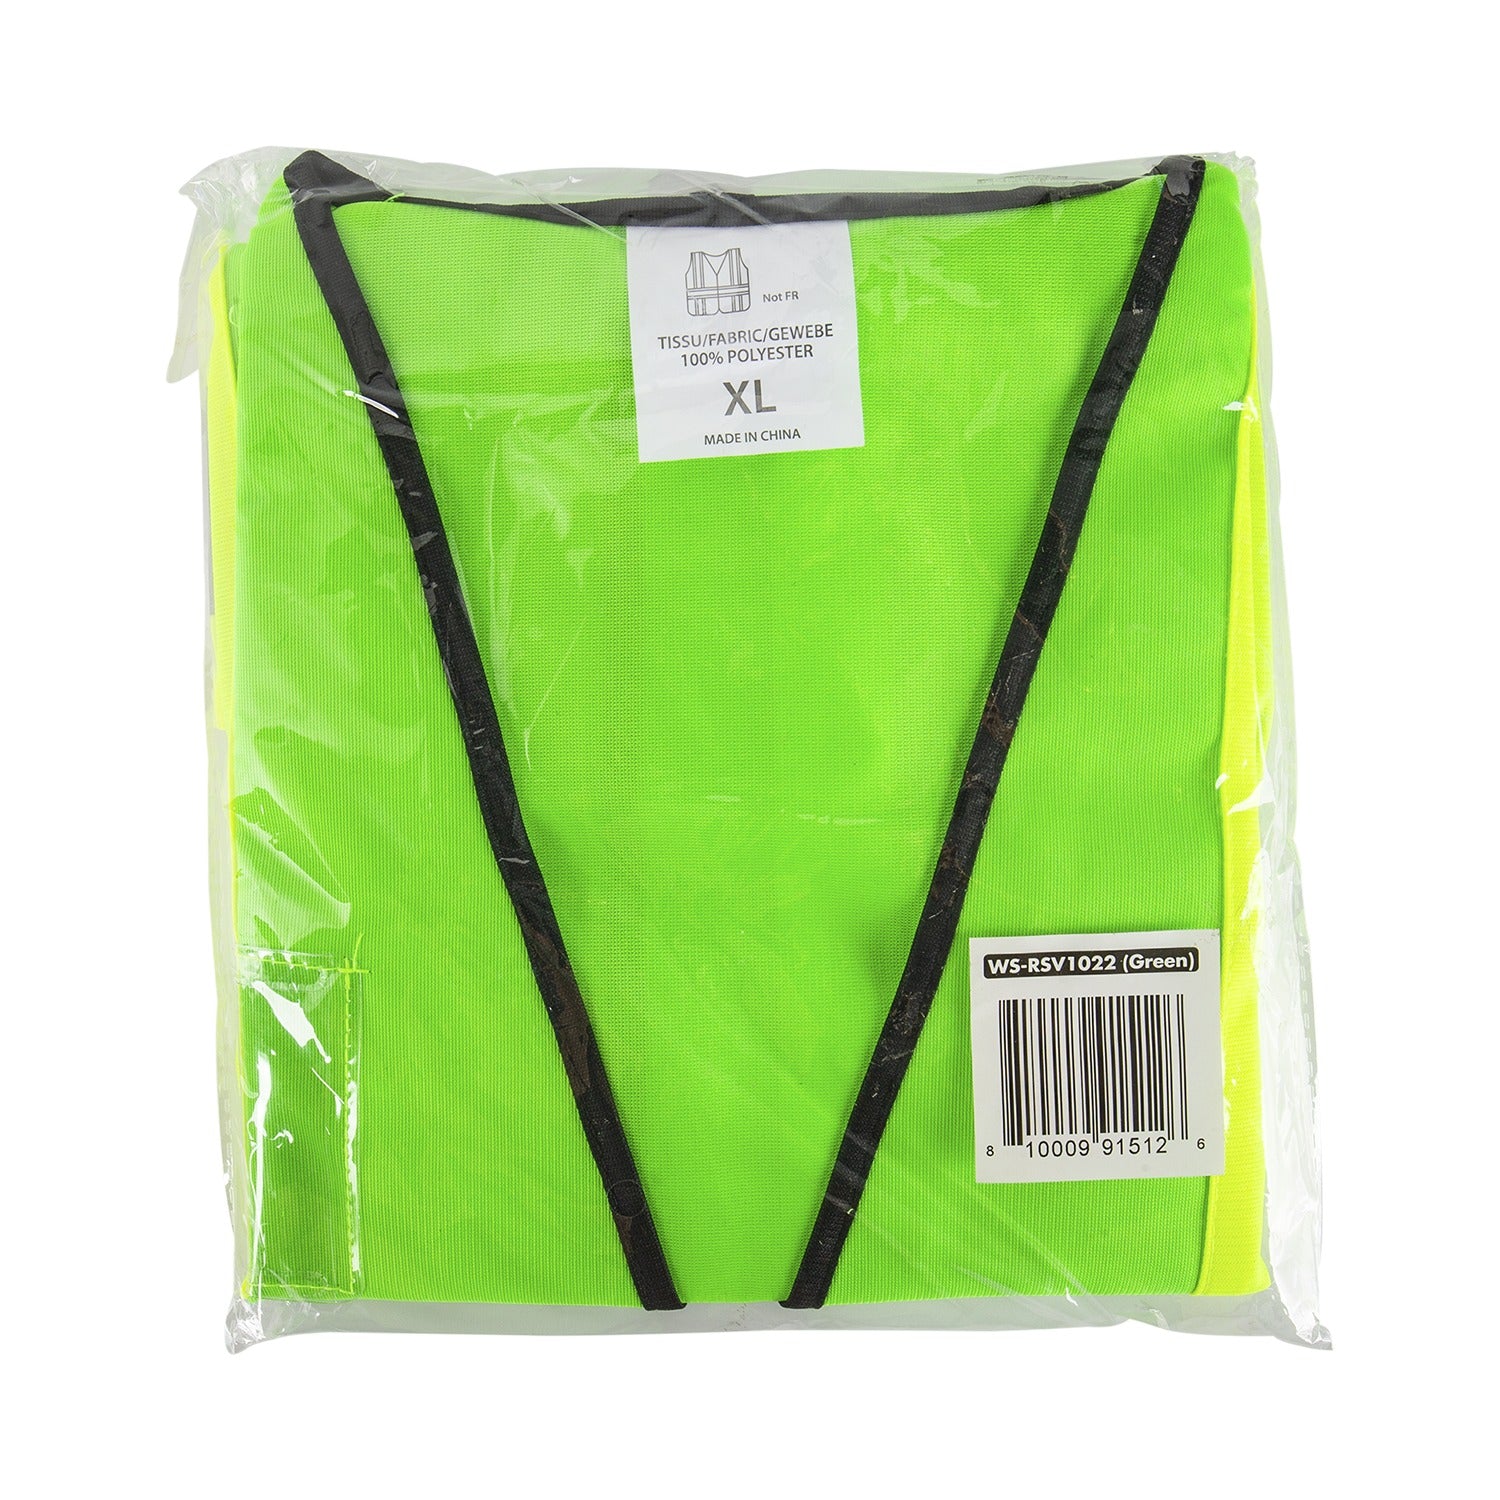 Karat High Visibility Reflective Safety Vest with Velcro Fastening